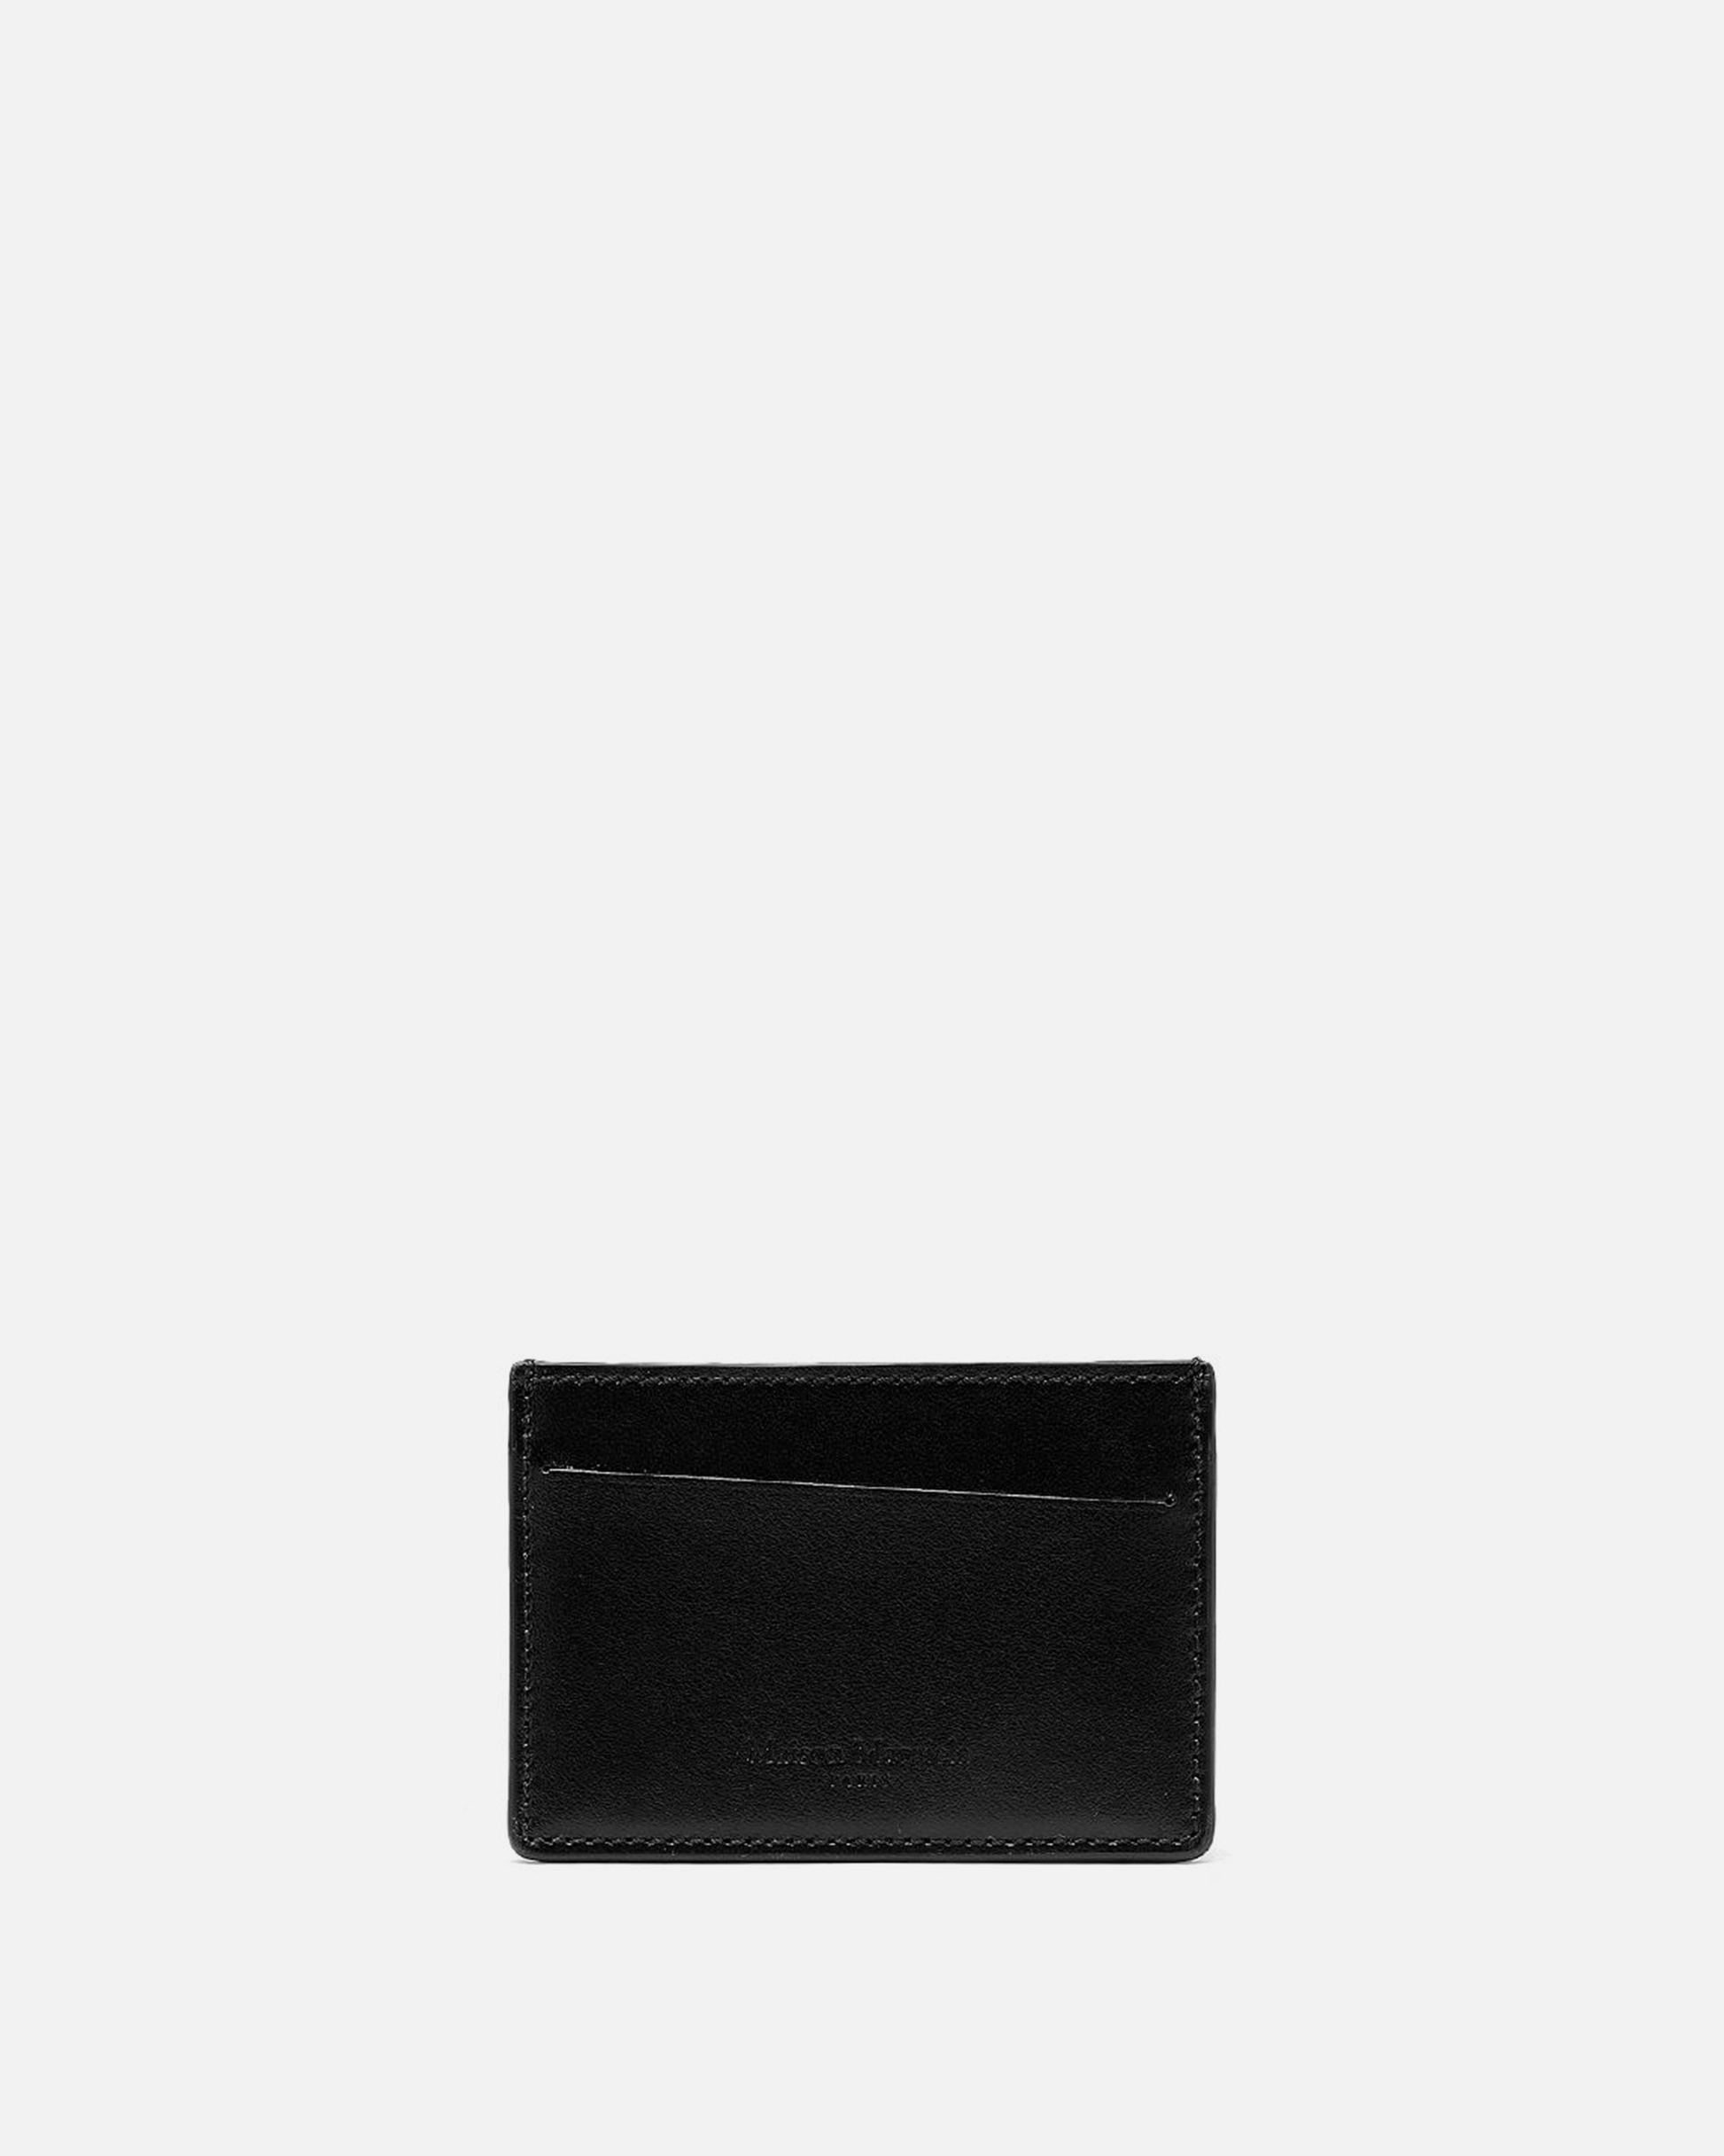 Maison Margiela Leather Goods Leather Cardholder in Black